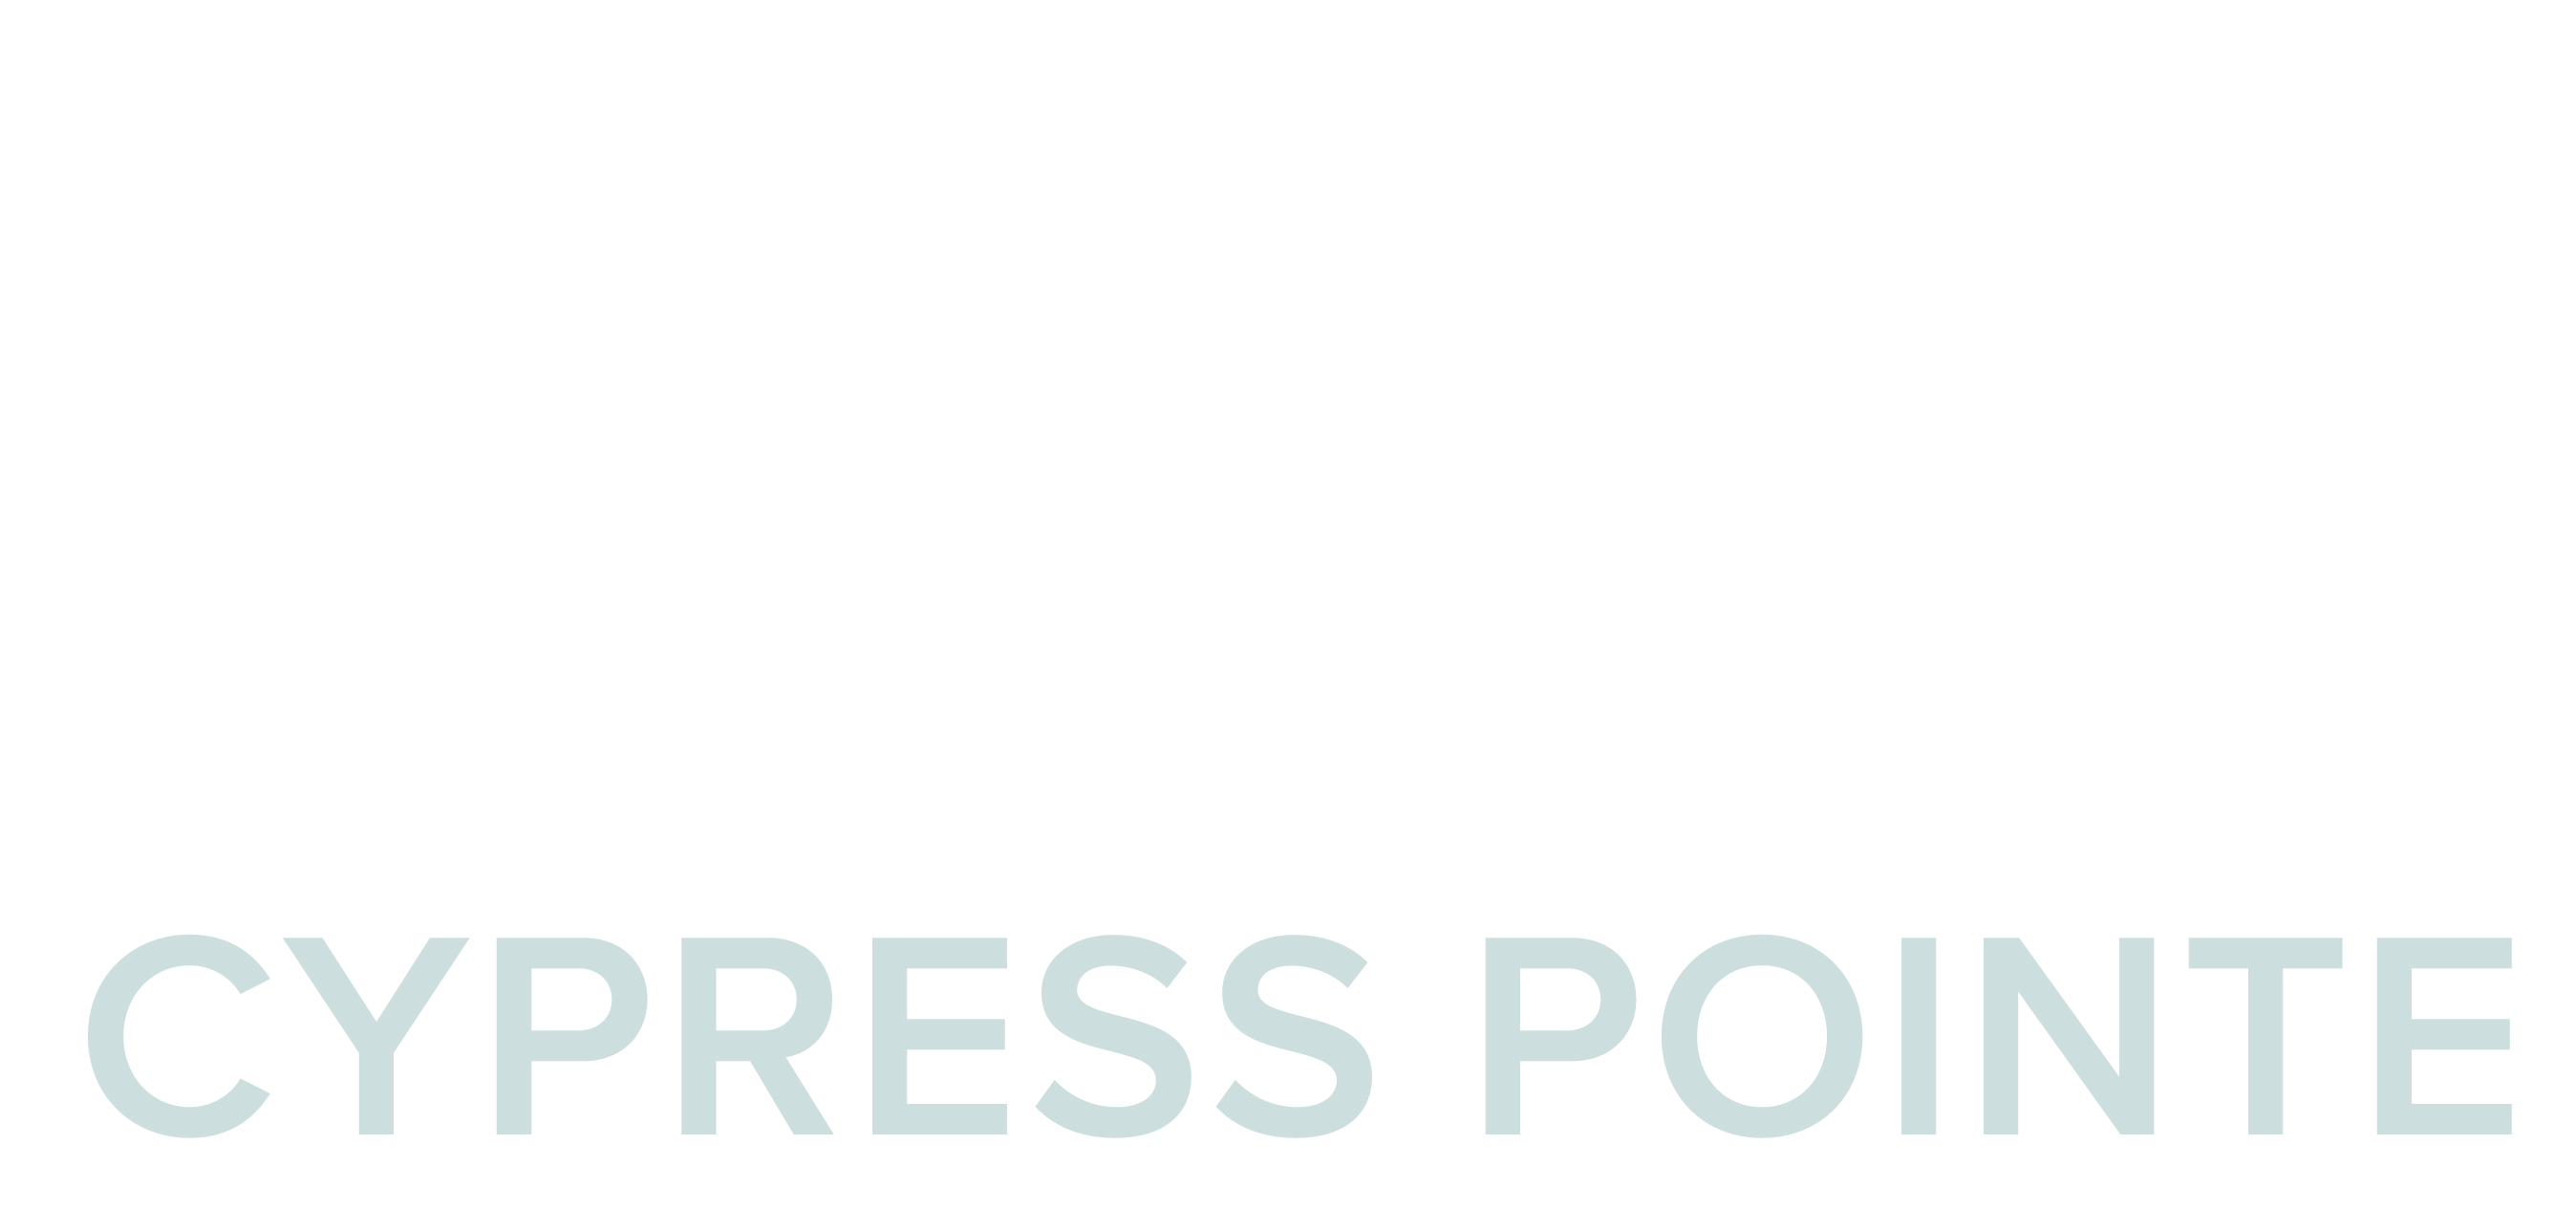 Prose Cypress Pointe